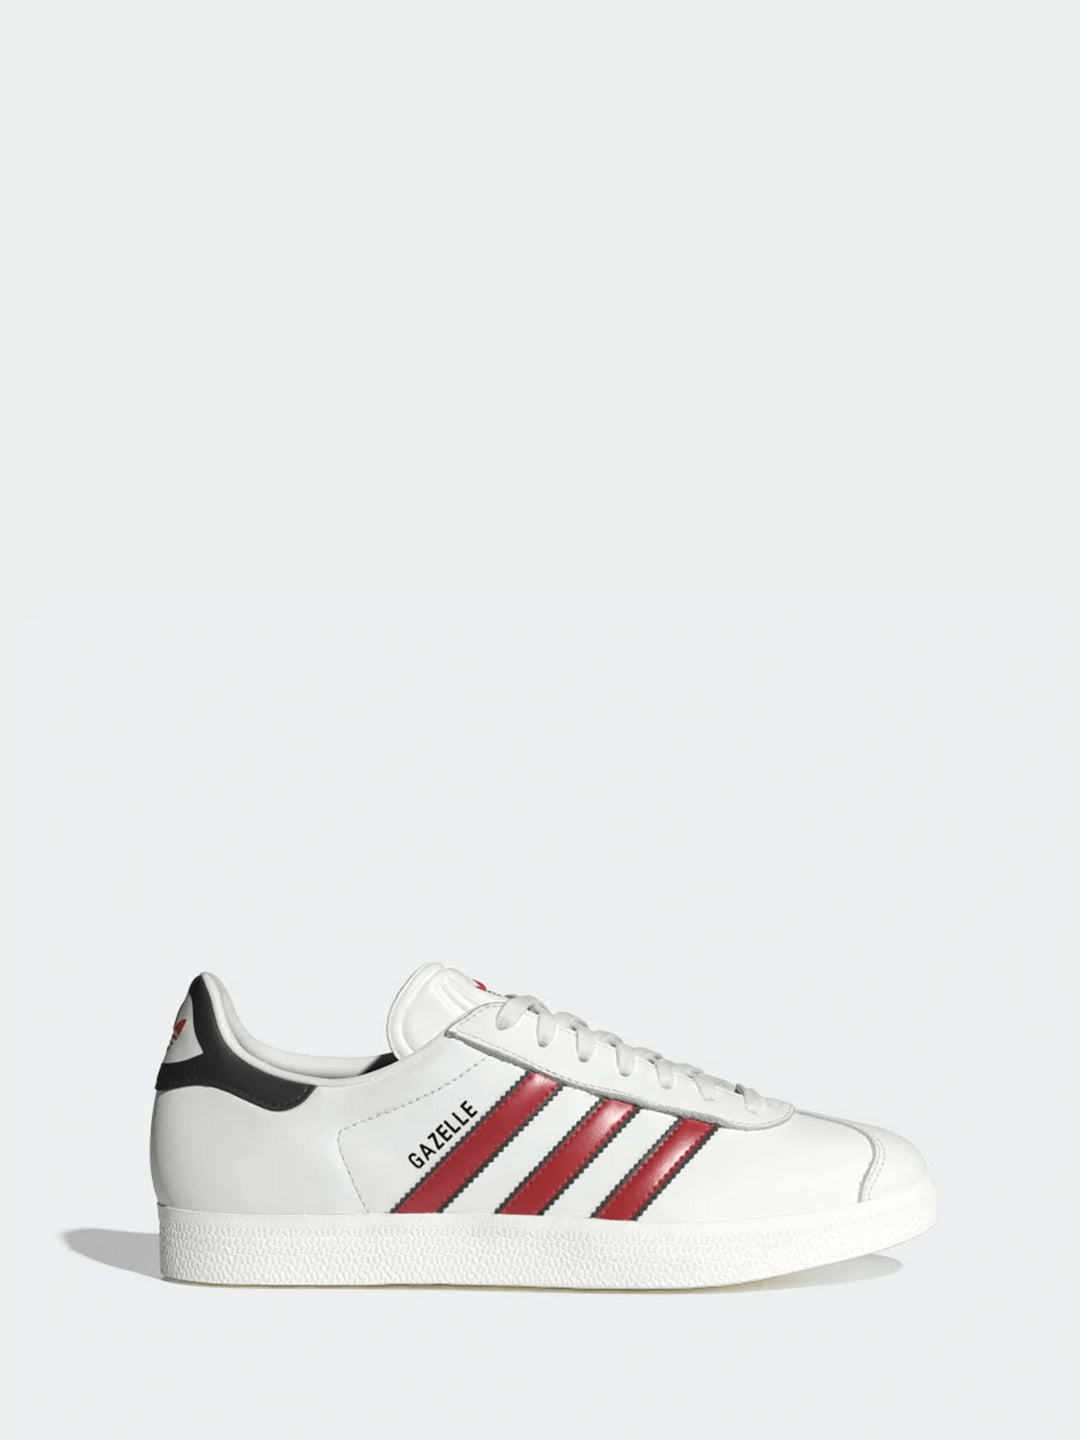 Adidas Gazelle sneakers bianco con bande rosse